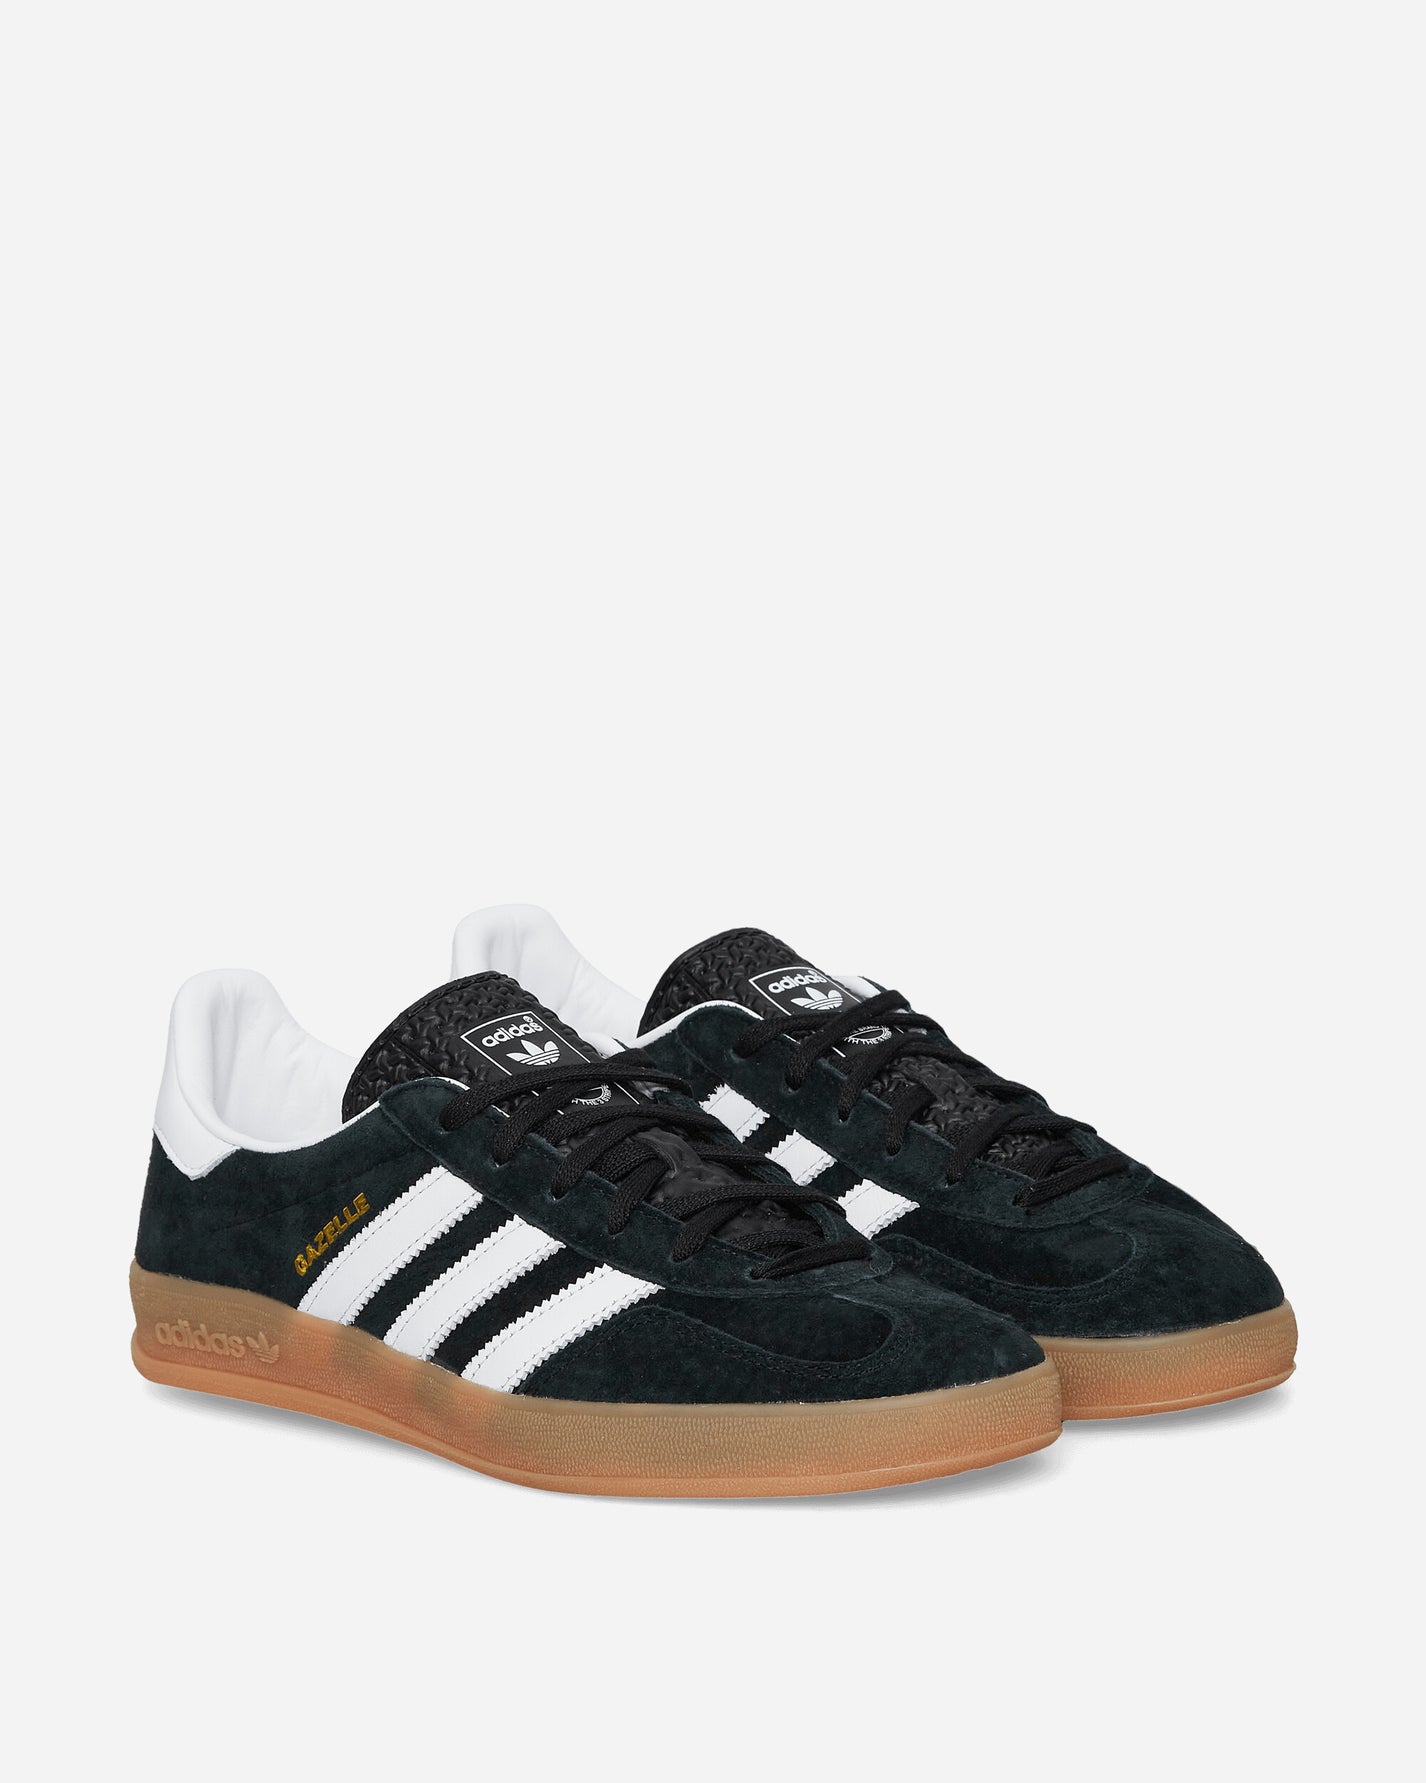 adidas Gazelle Indoor Black/White Sneakers Low H06259 001